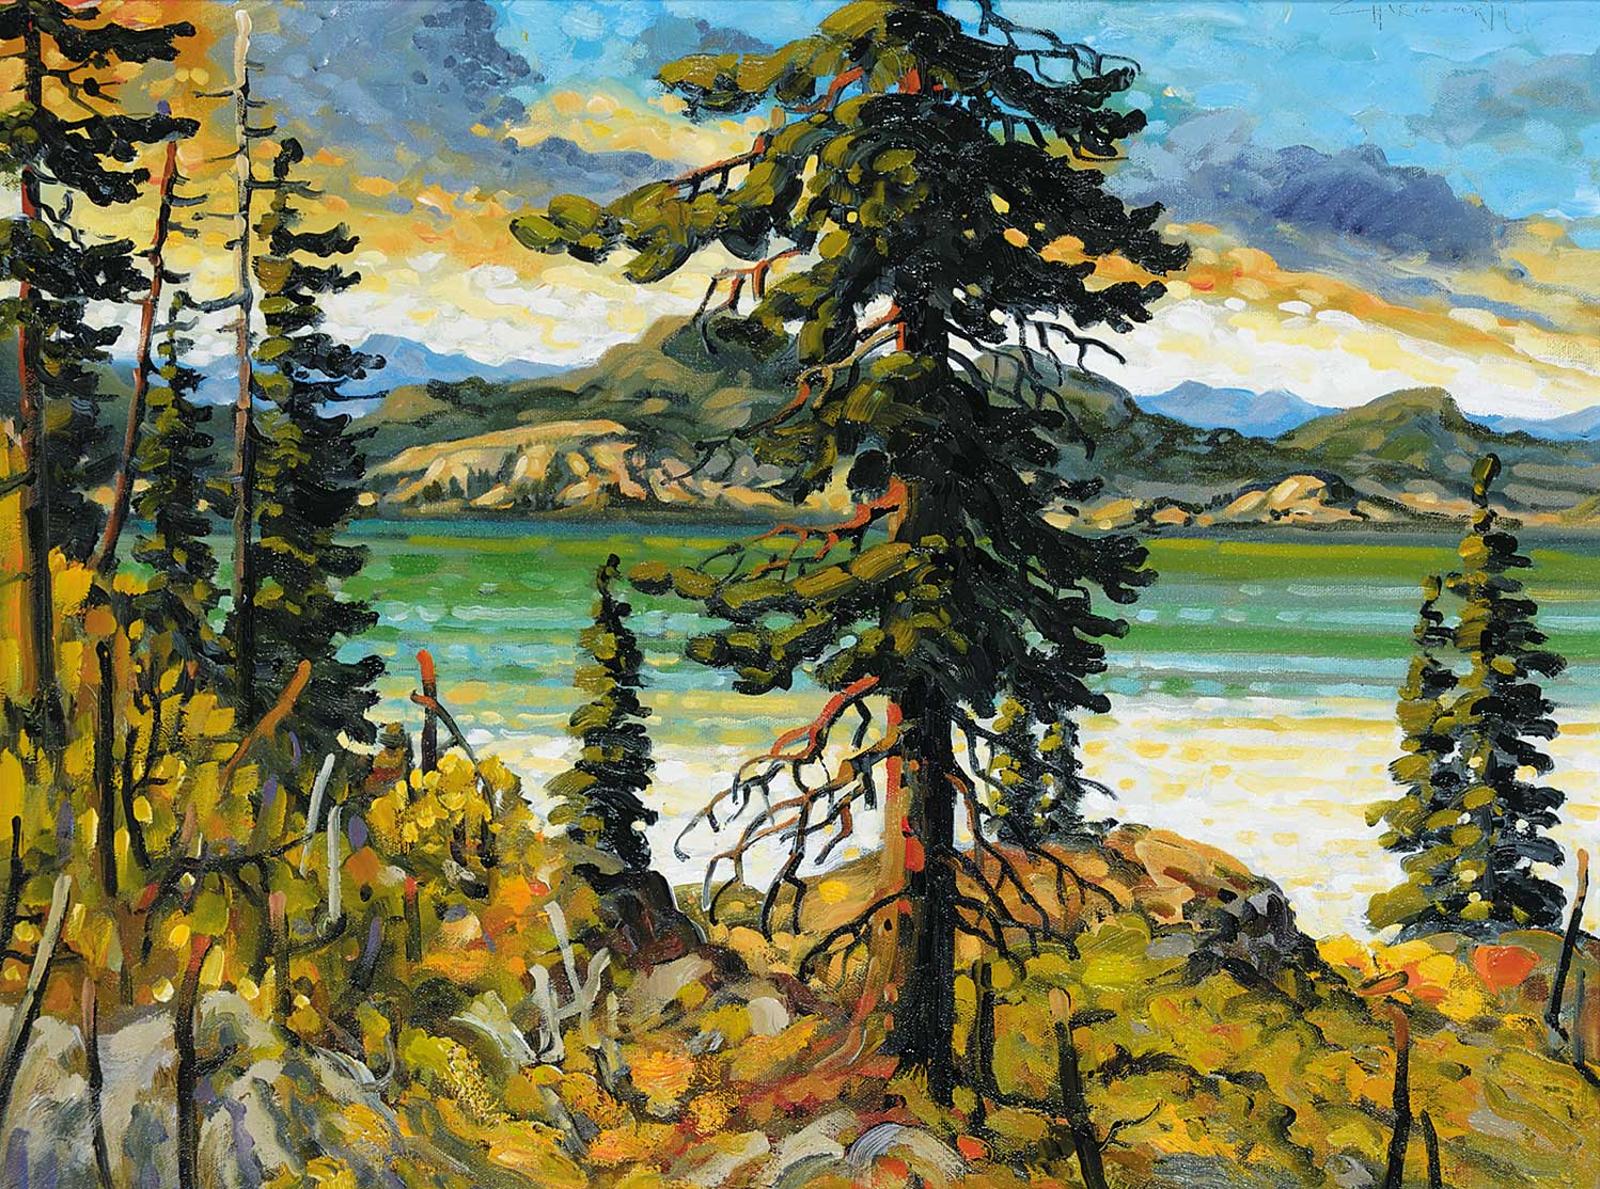 Rod Charlesworth (1955) - Evening Calm, Okanagan Lake